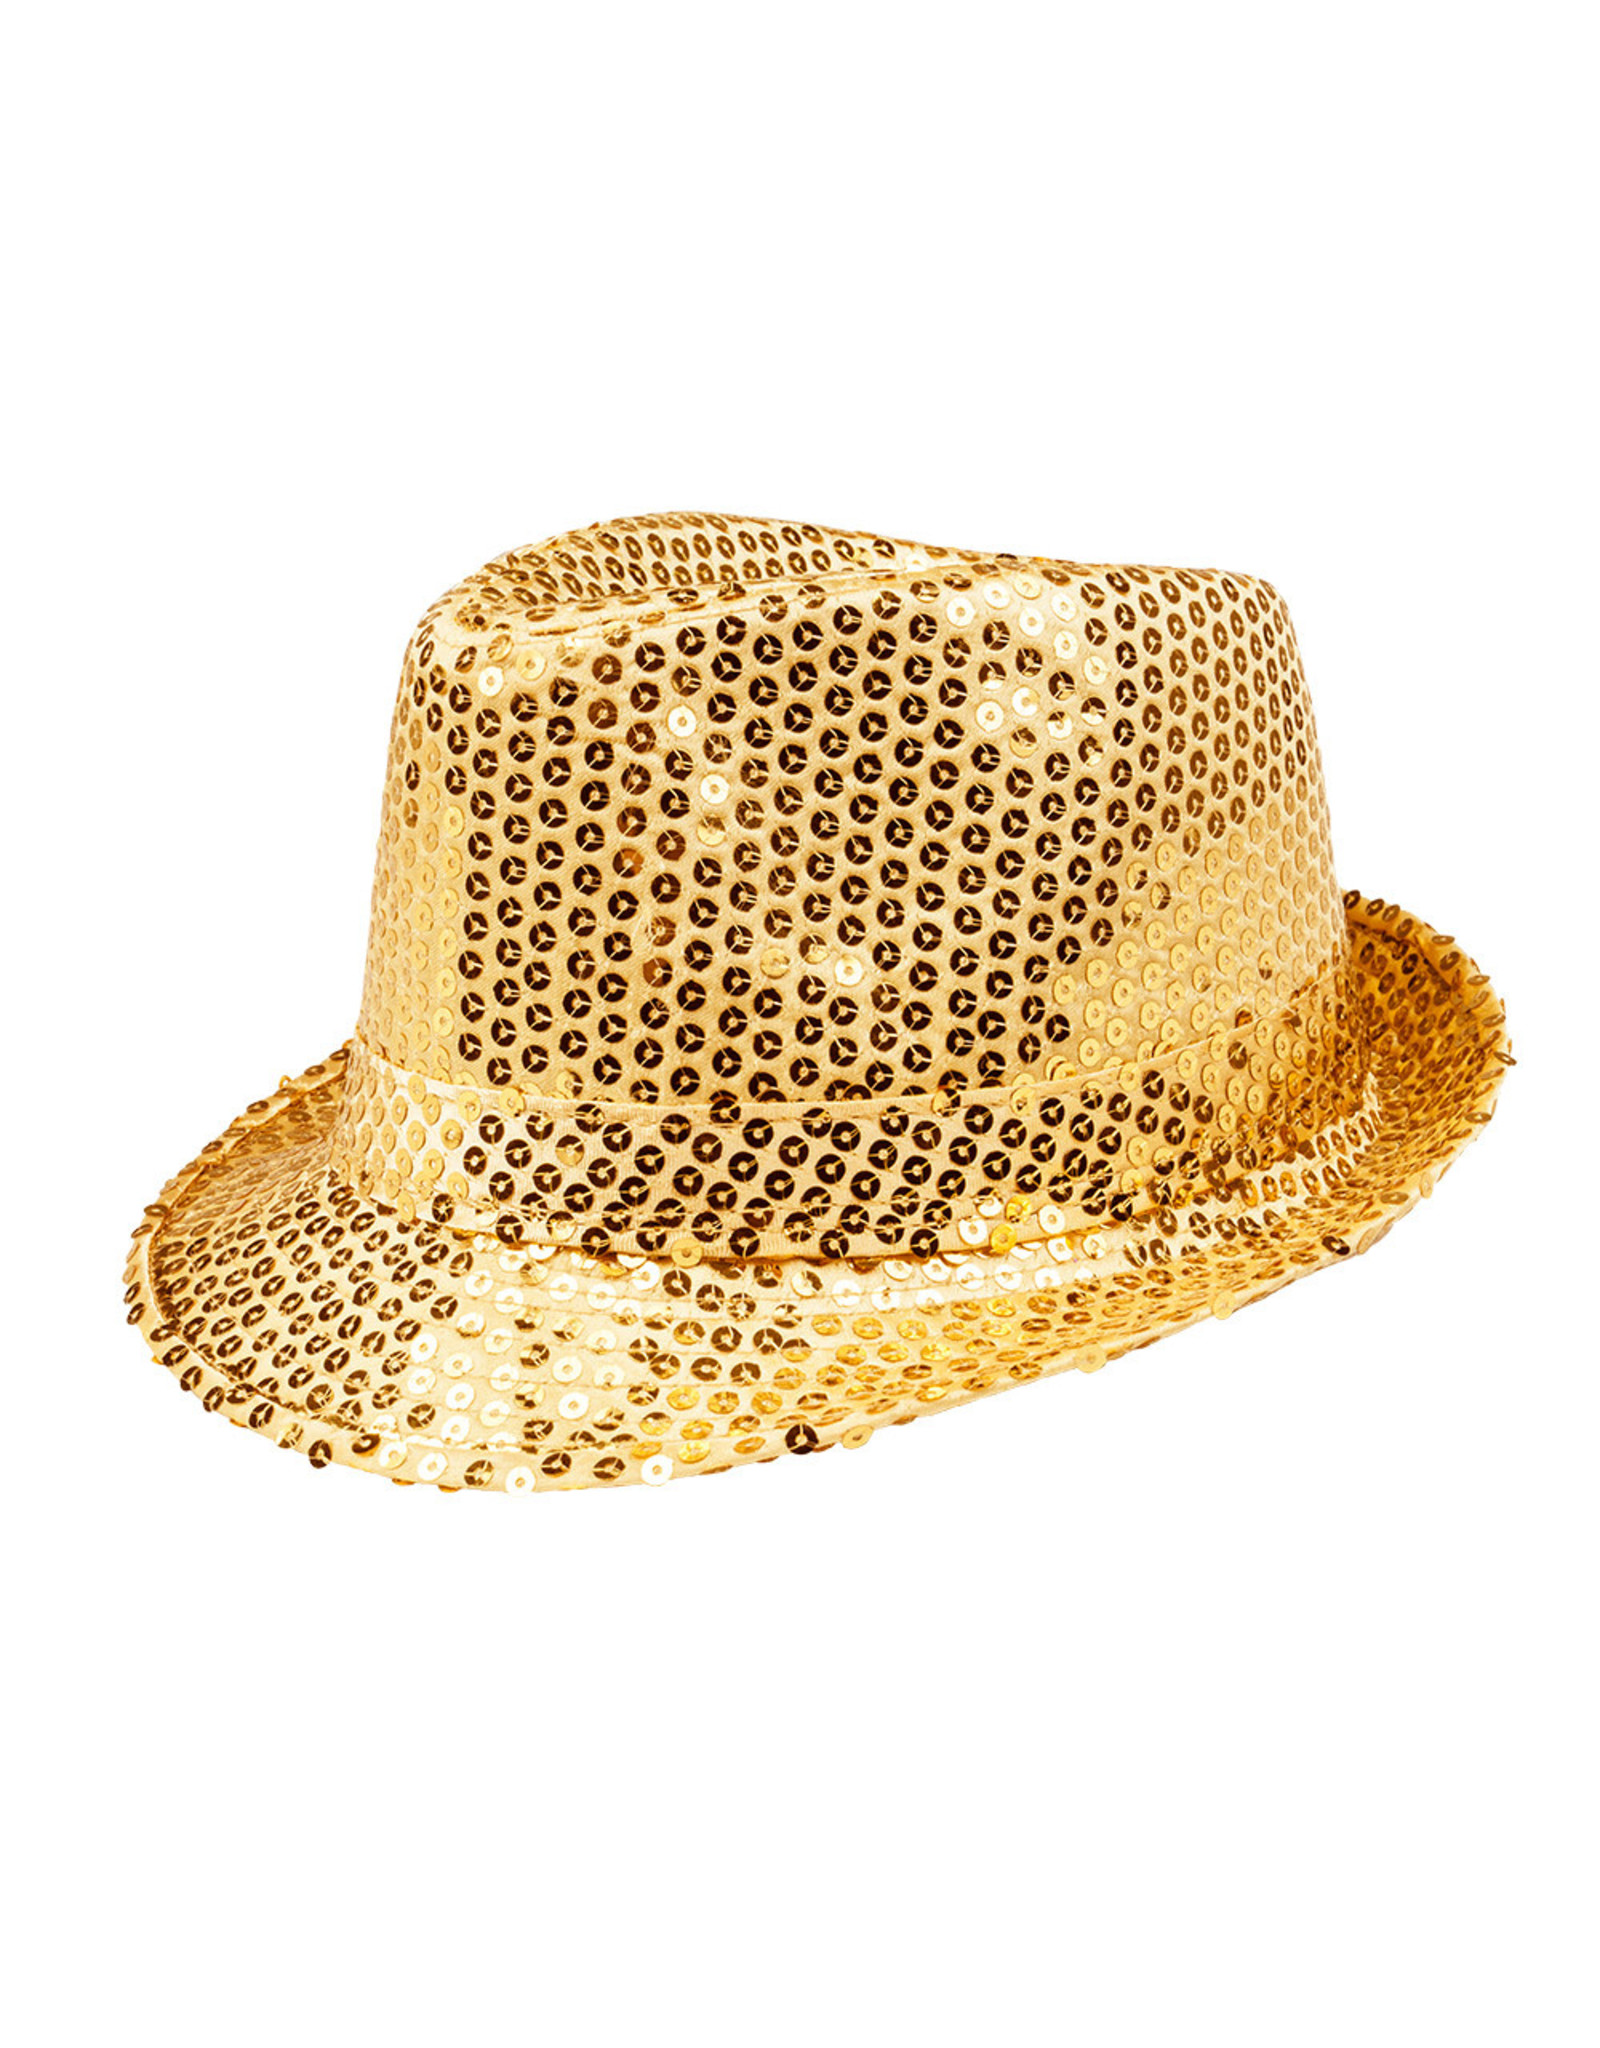 Boland popstar hoed sequins goud